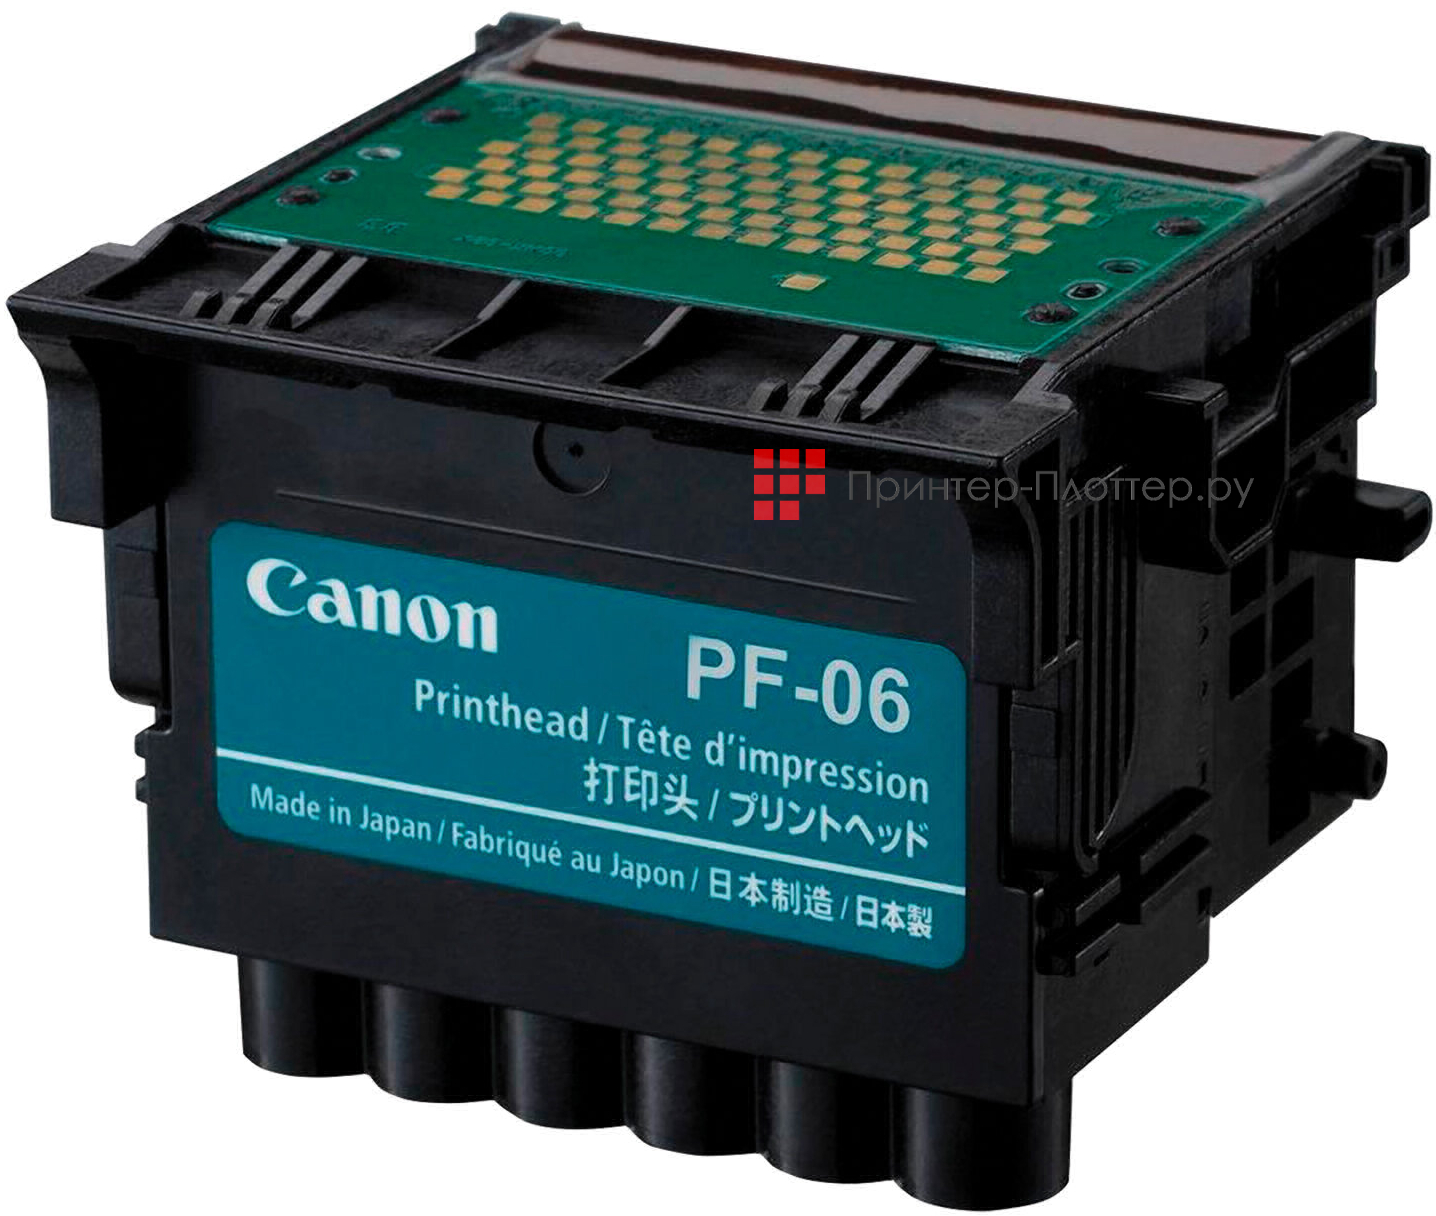 Canon PF-06 на выгодных условиях